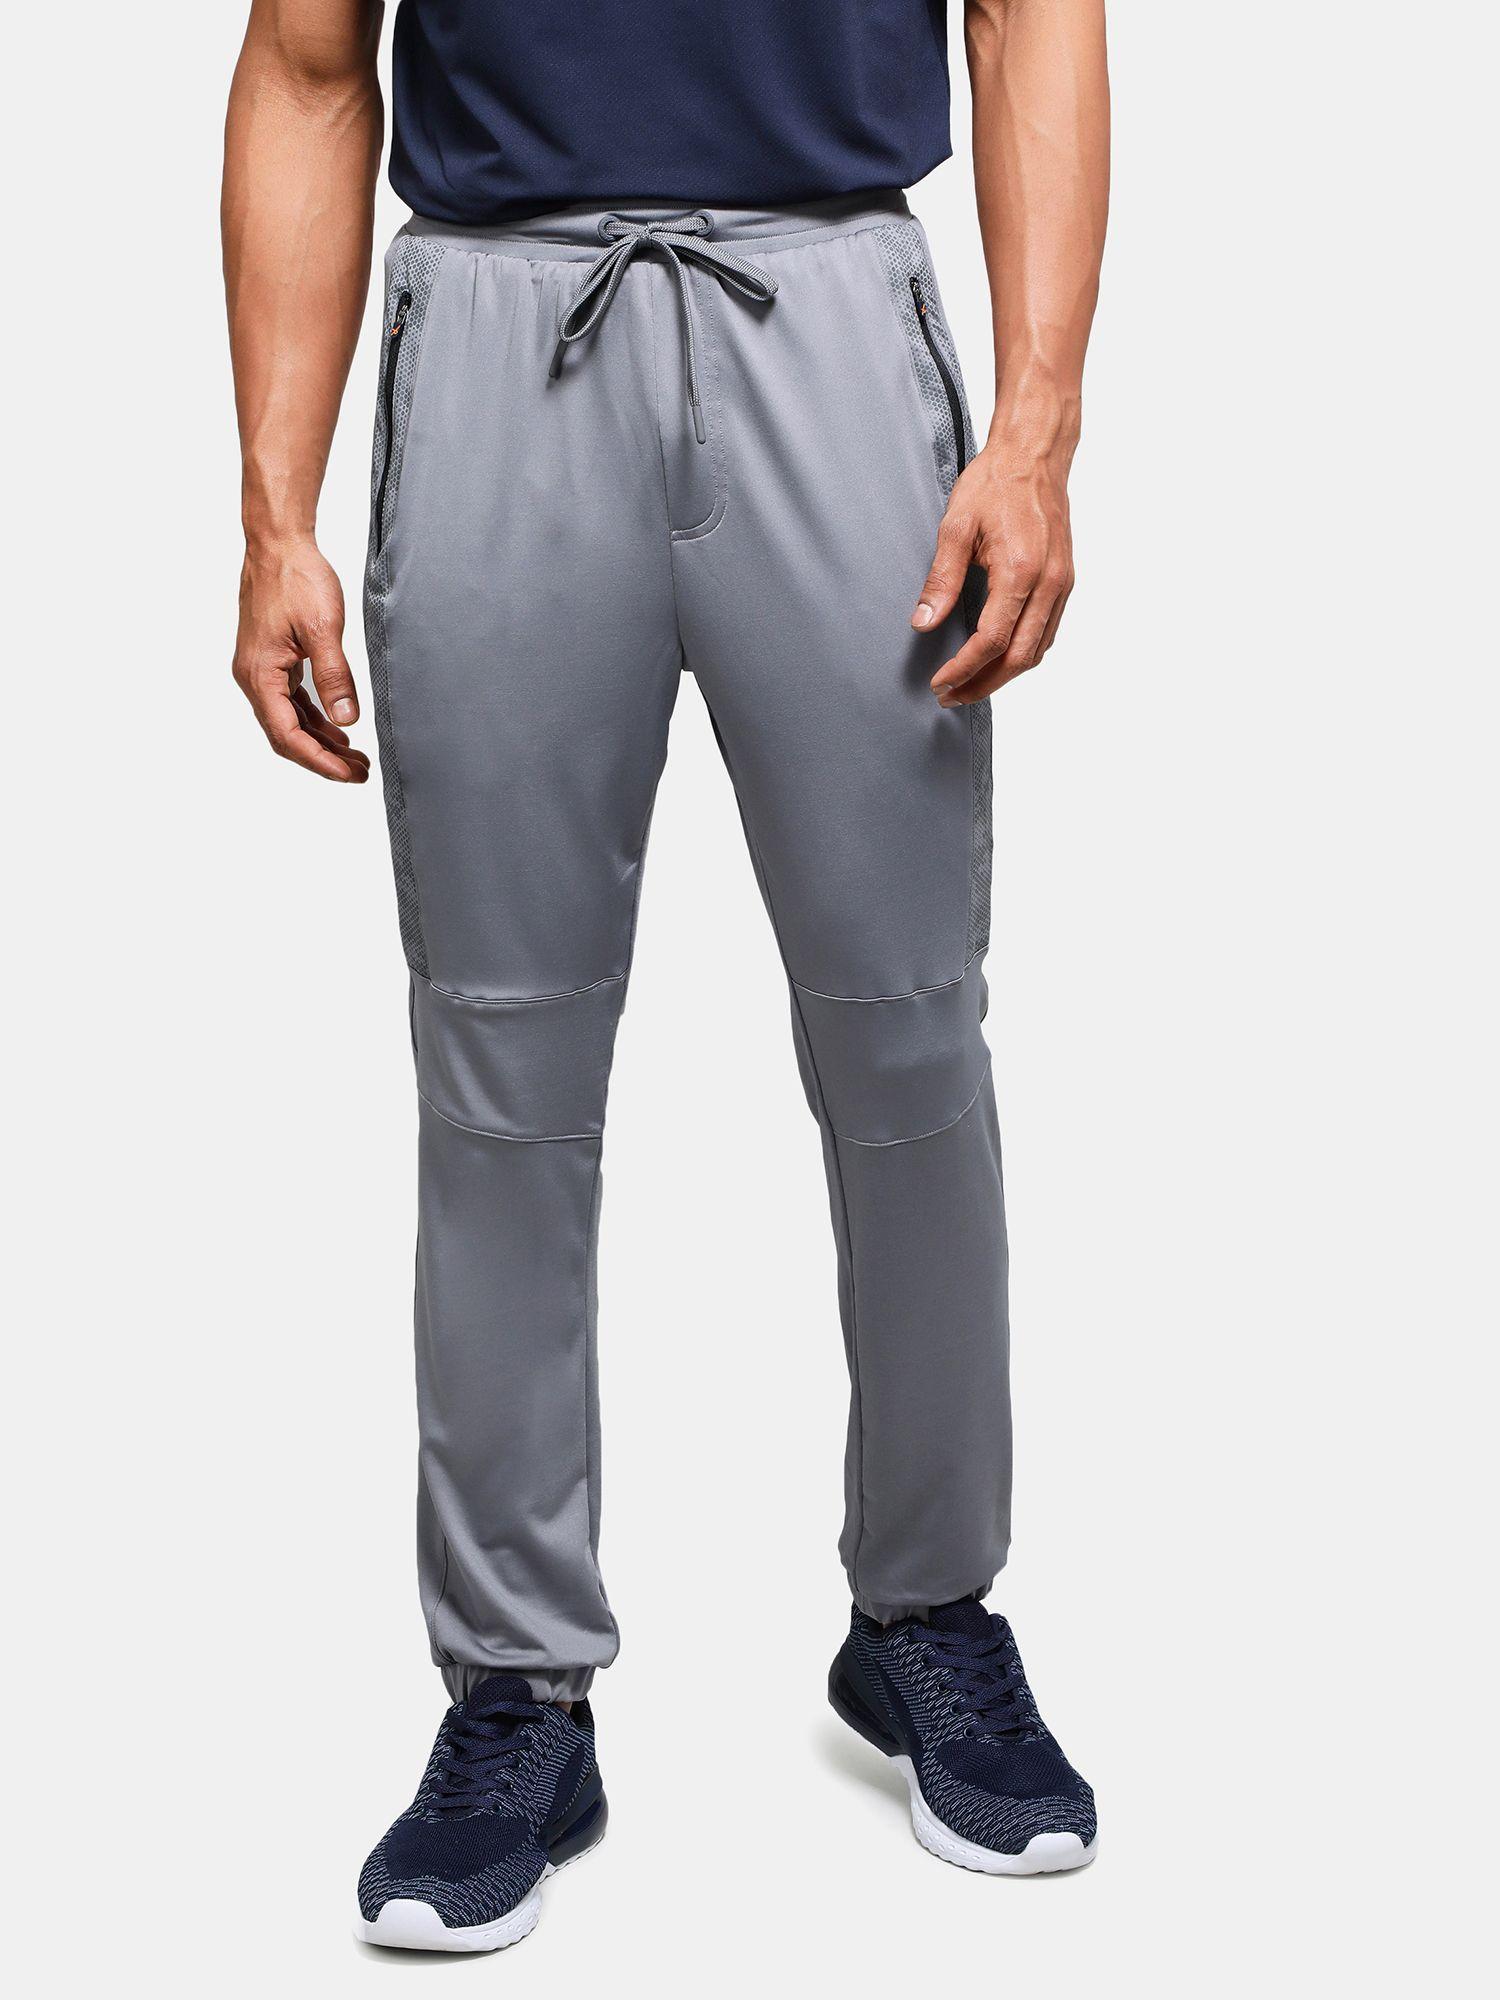 mv12 men microfiber stretch joggers with zipper pockets & stay dry treatment-grey